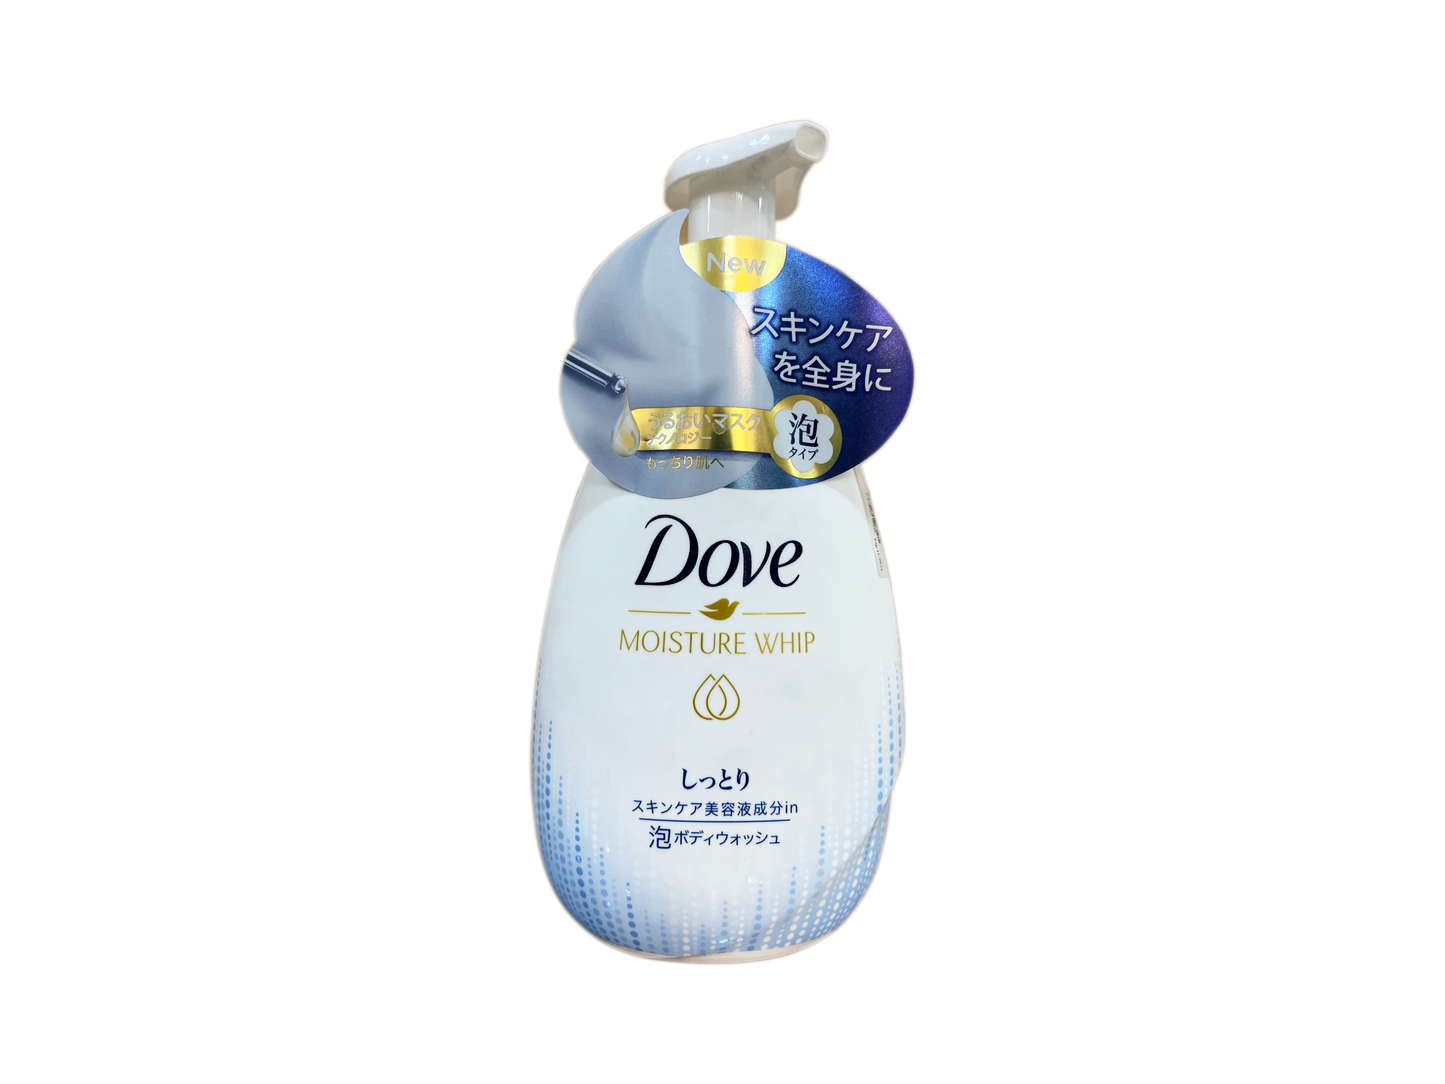 Dove, Moisture Whip Foam Body Wash (540 g)